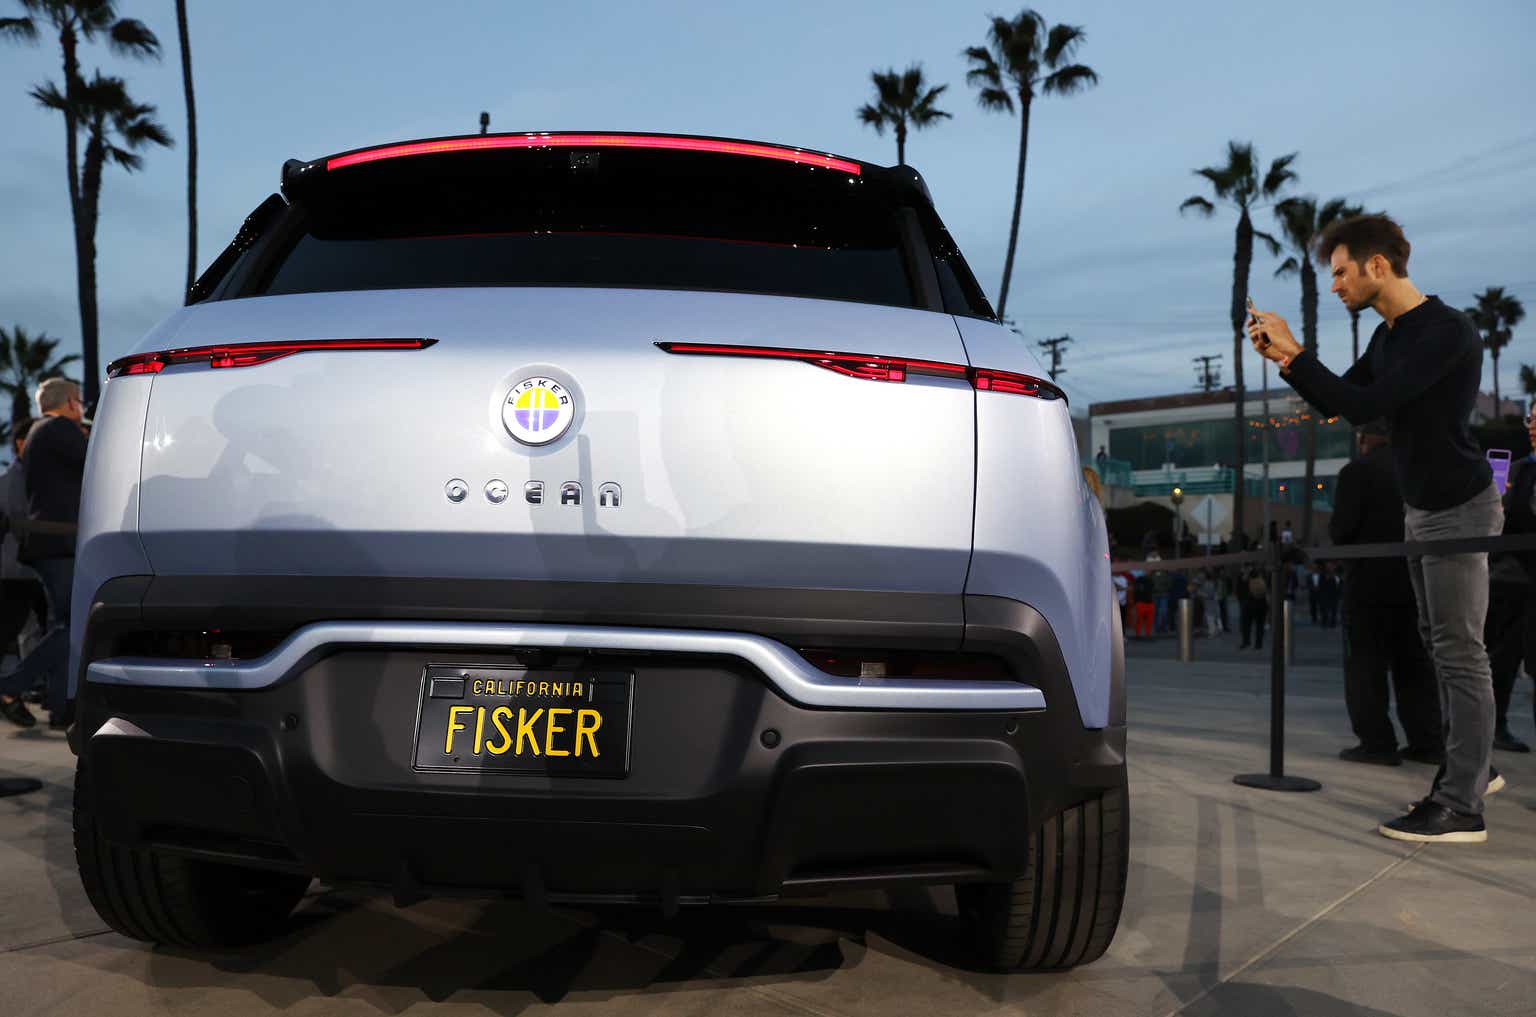 Tesla Model Y vs Fisker Ocean: Electric SUV Showdown